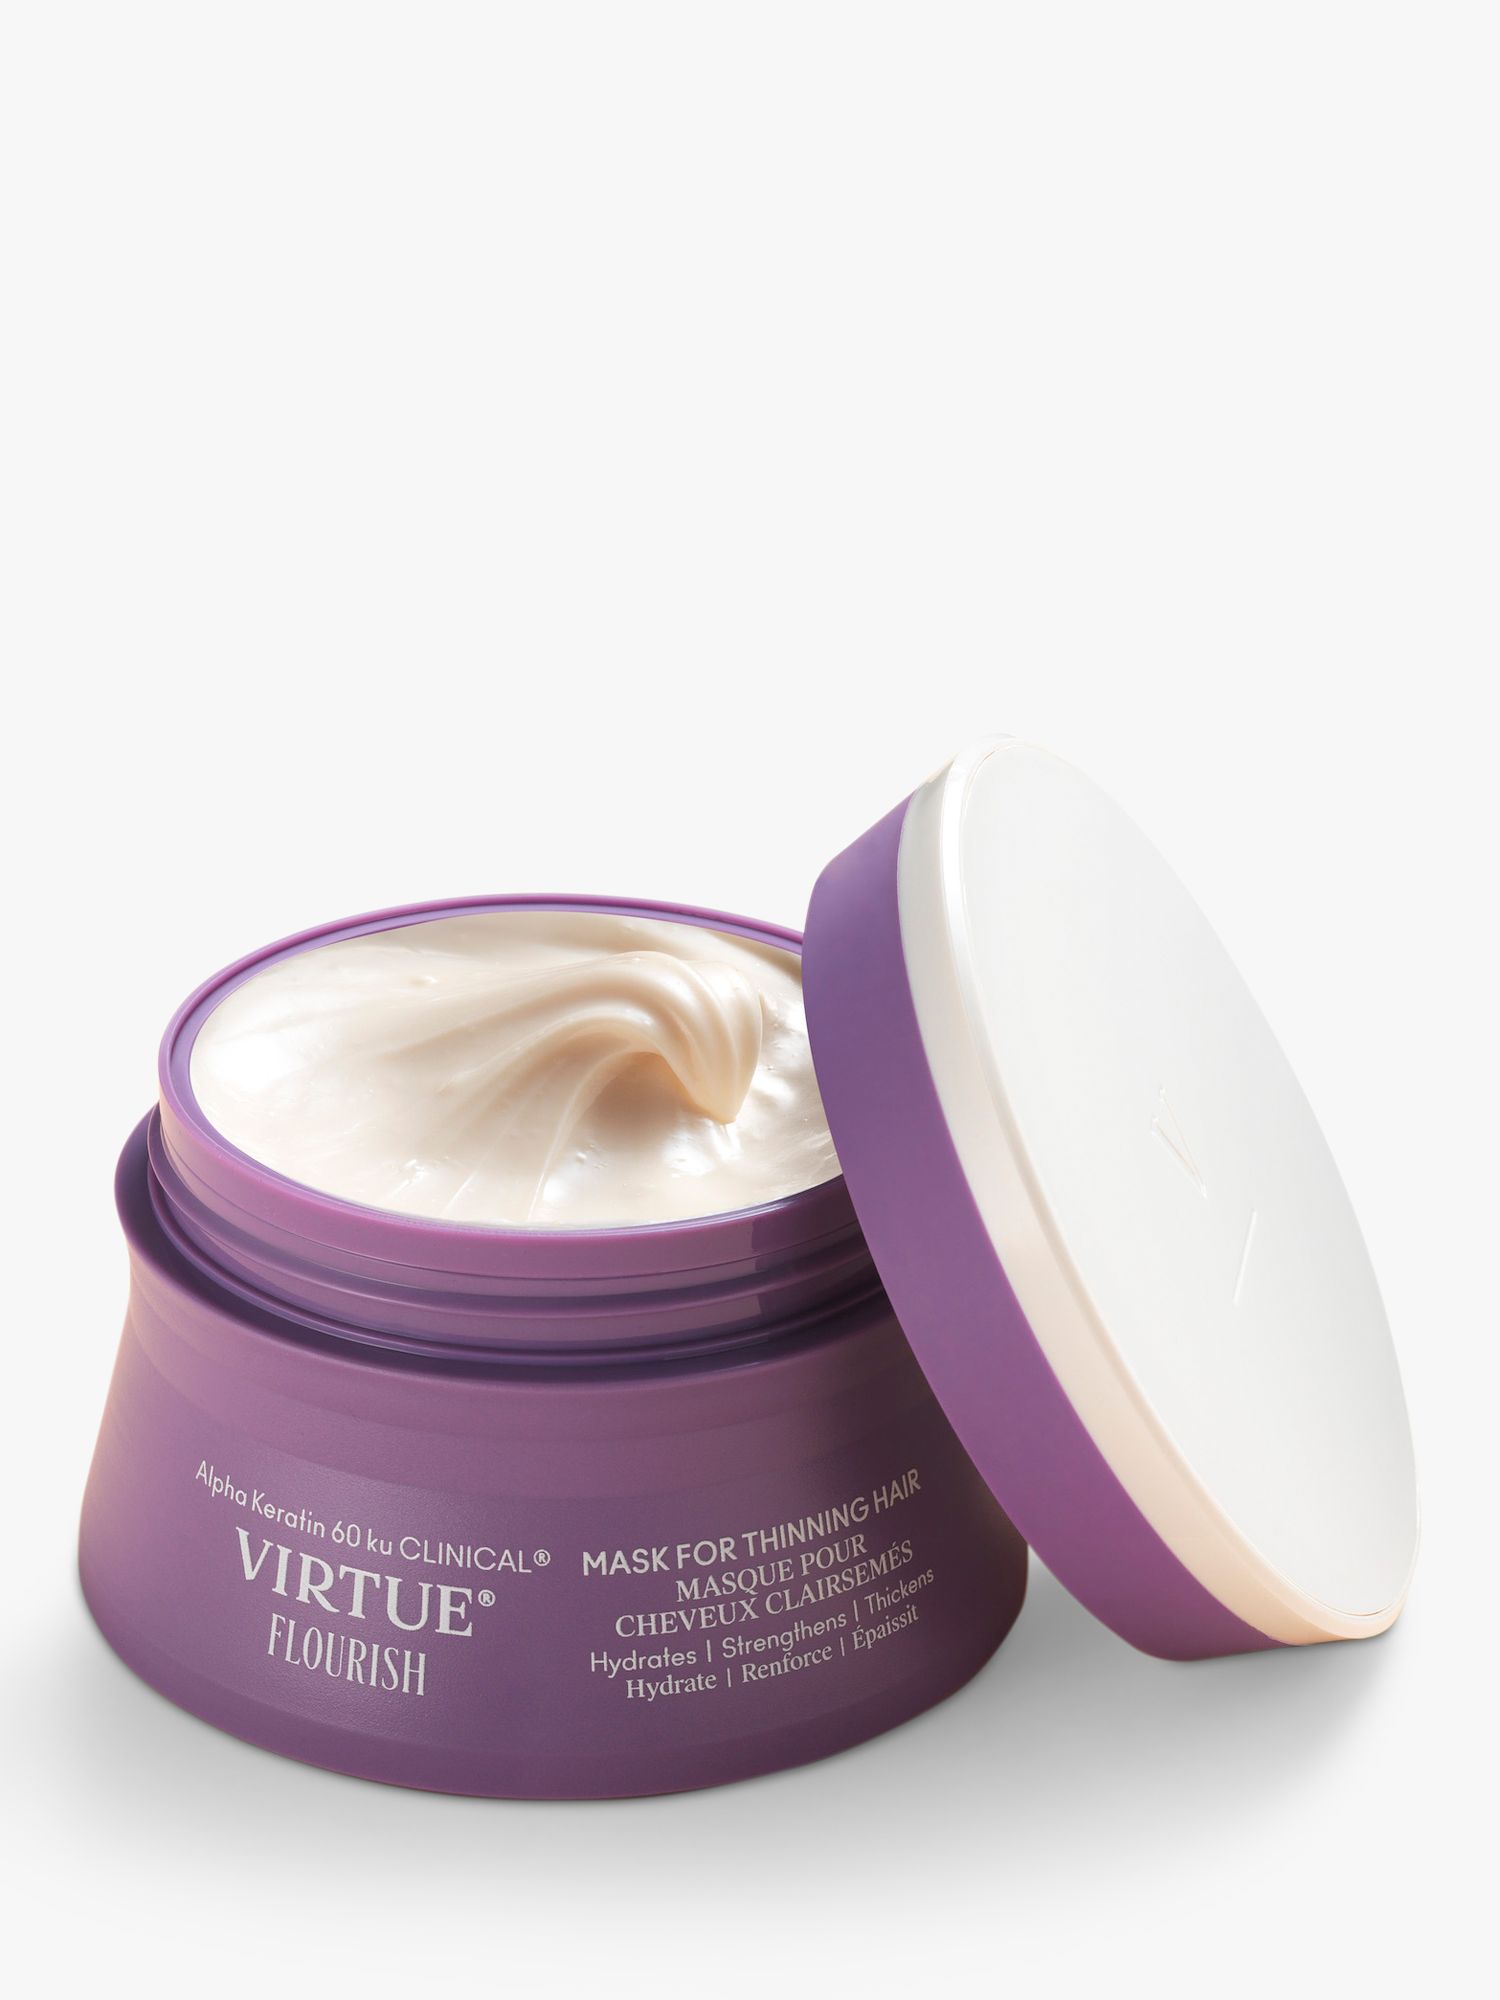 Virtue Flourish Mask for Thinning Hair, 150ml 10